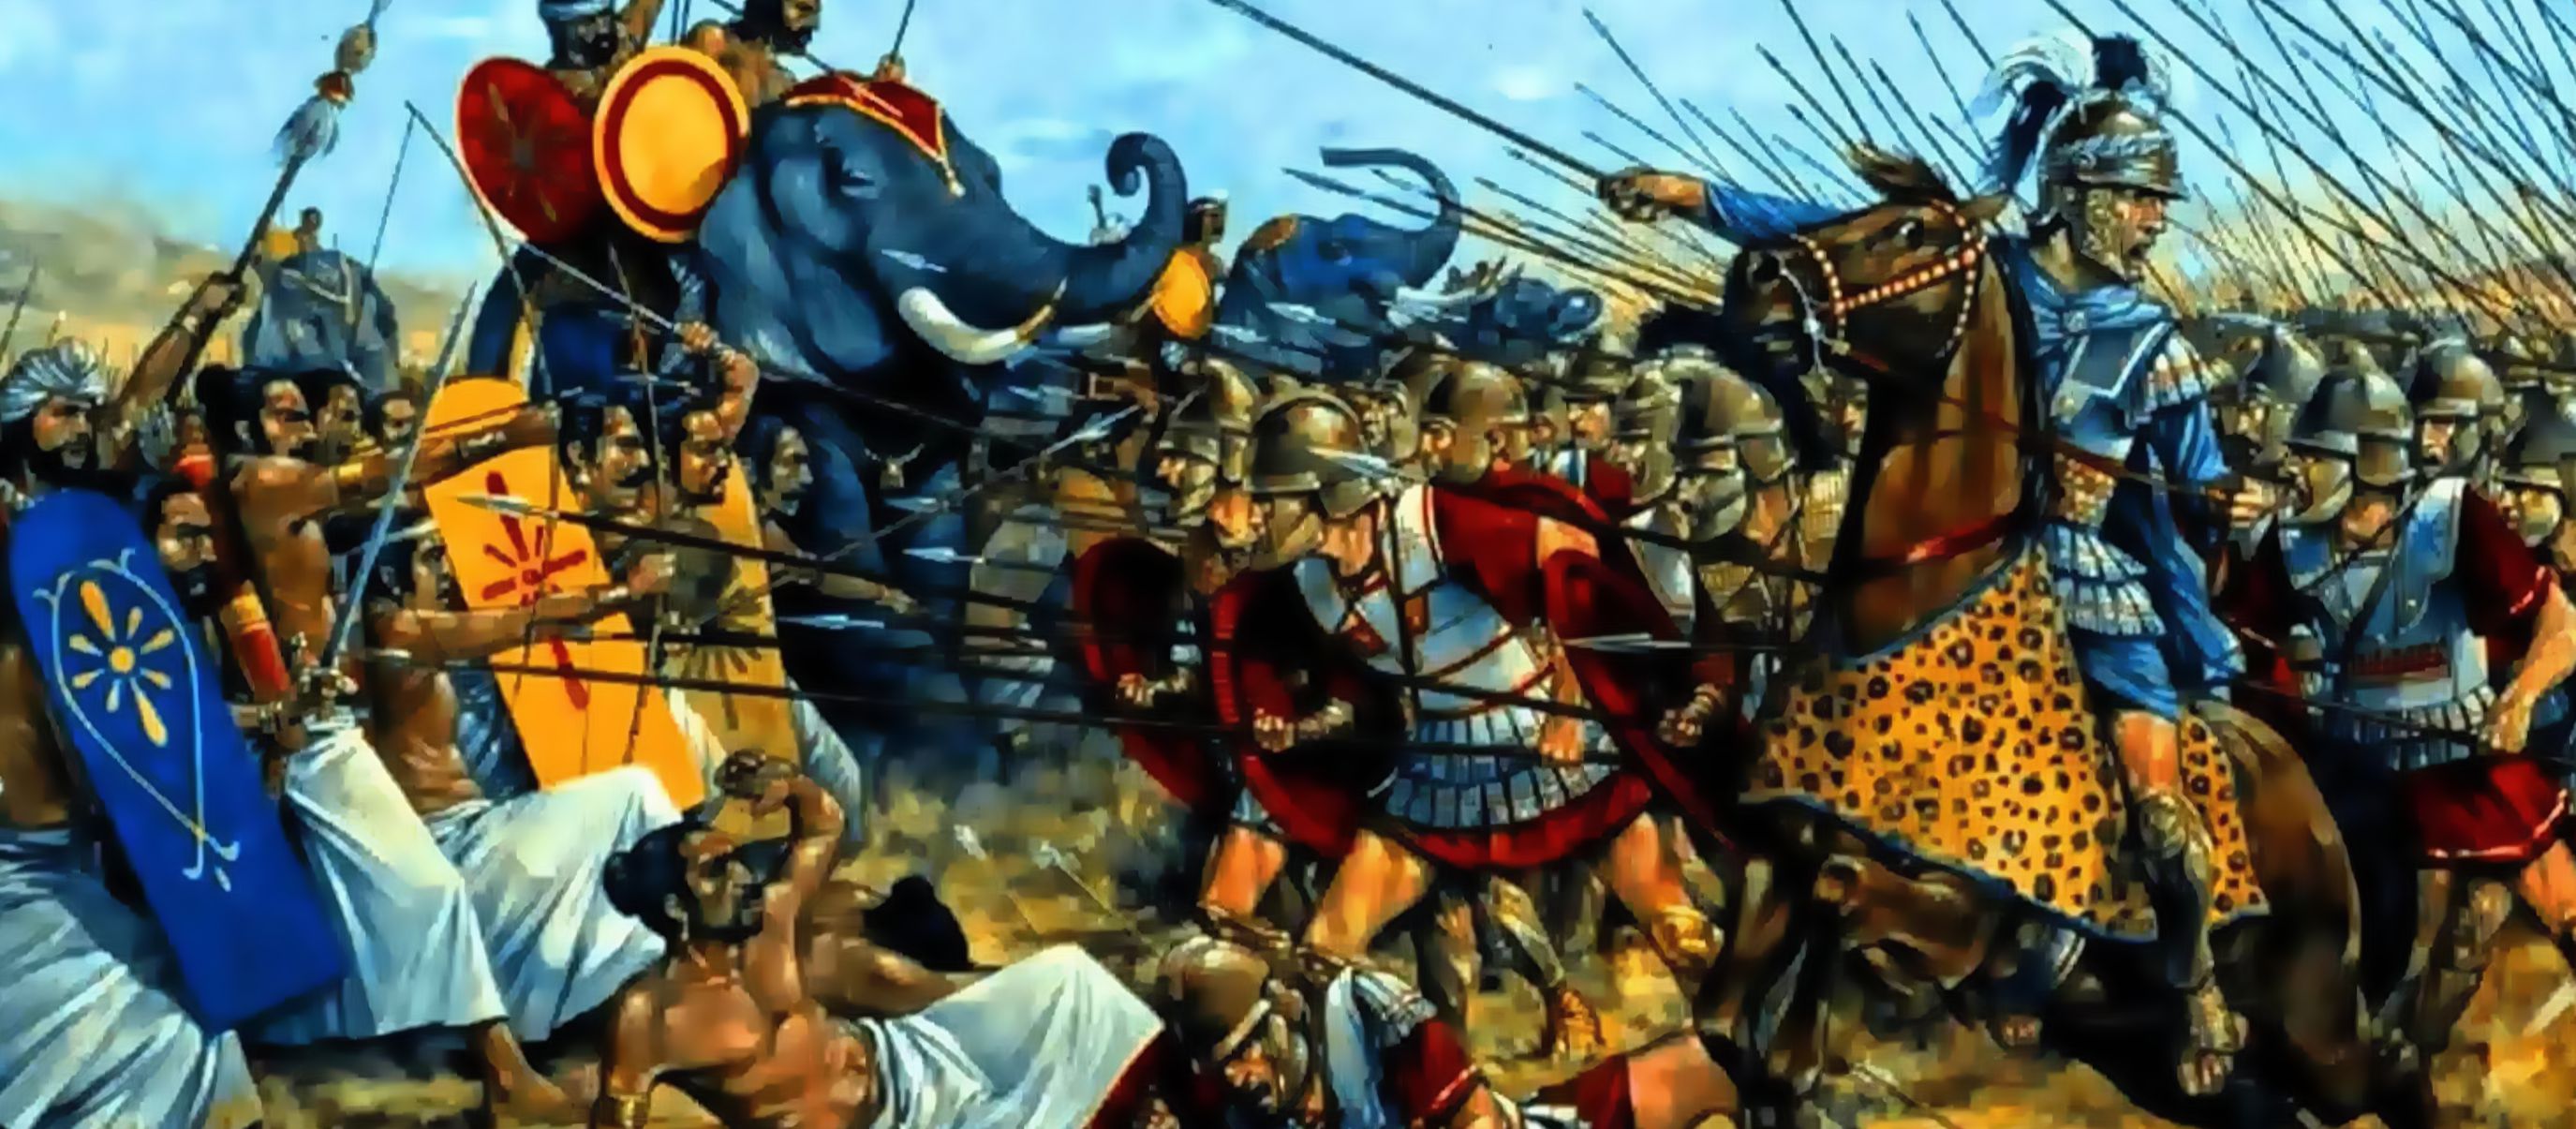 Битва у города гавгамелы